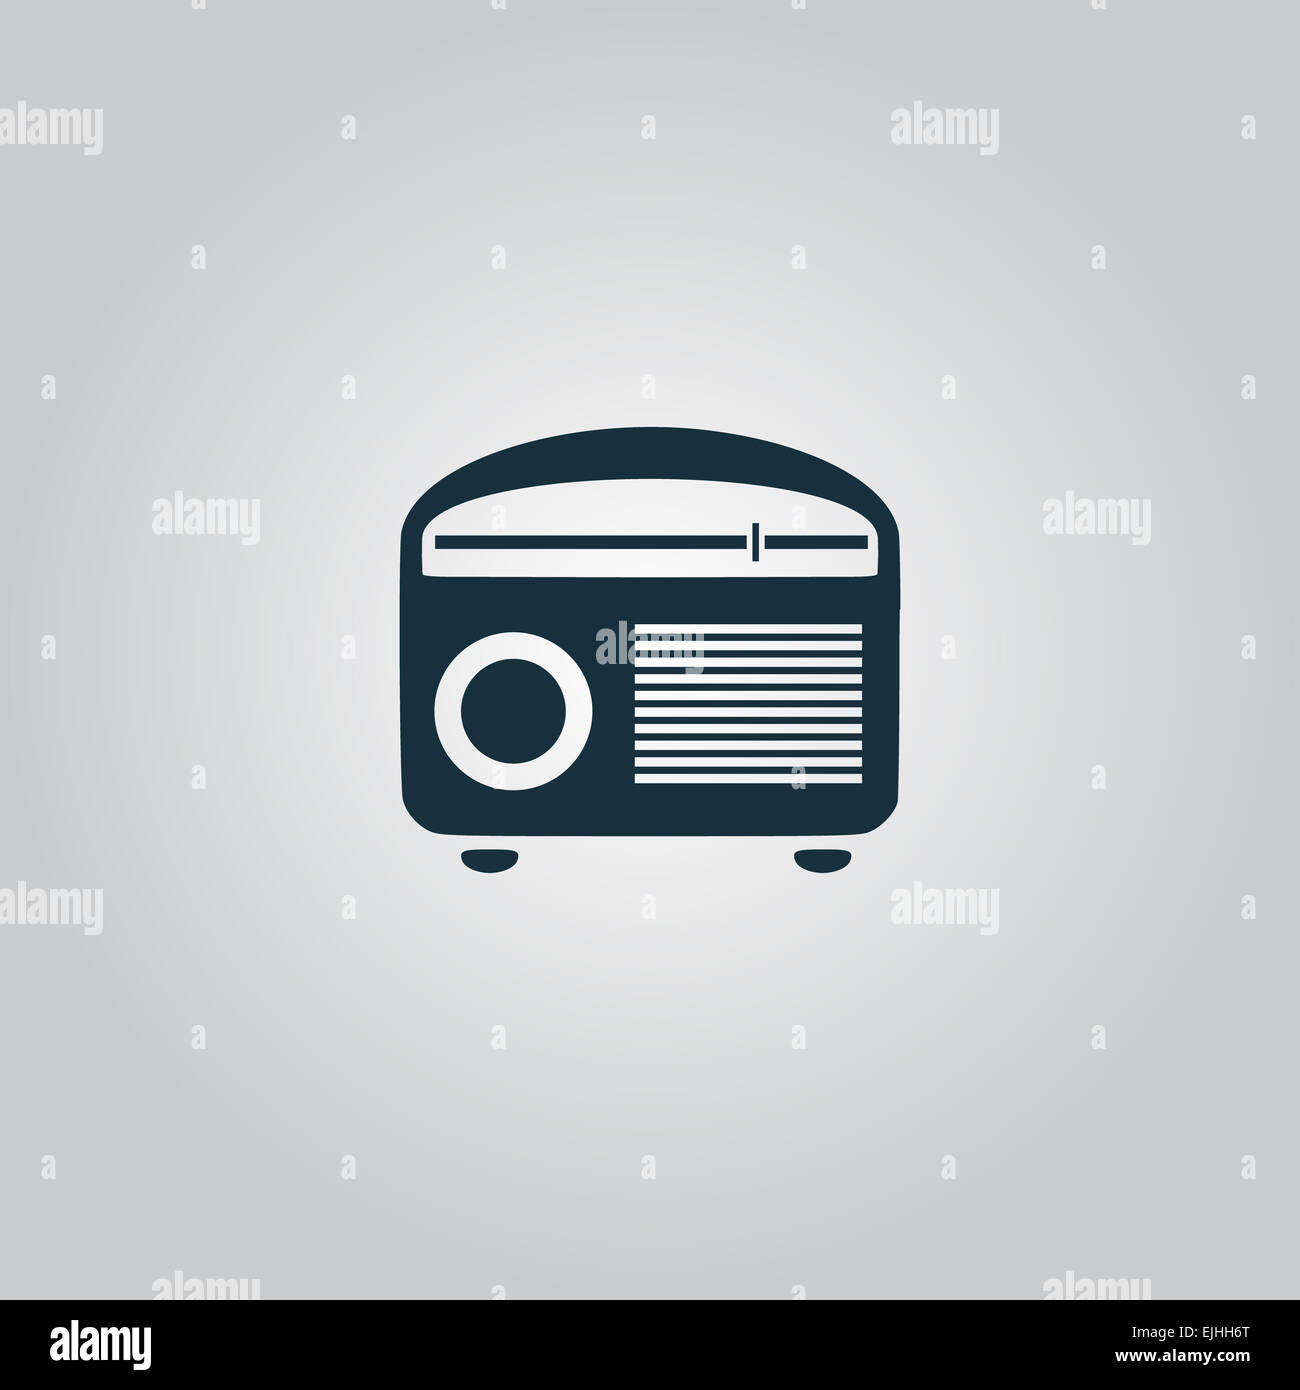 Retro revival radios tuner vector illustration. Stock Photo